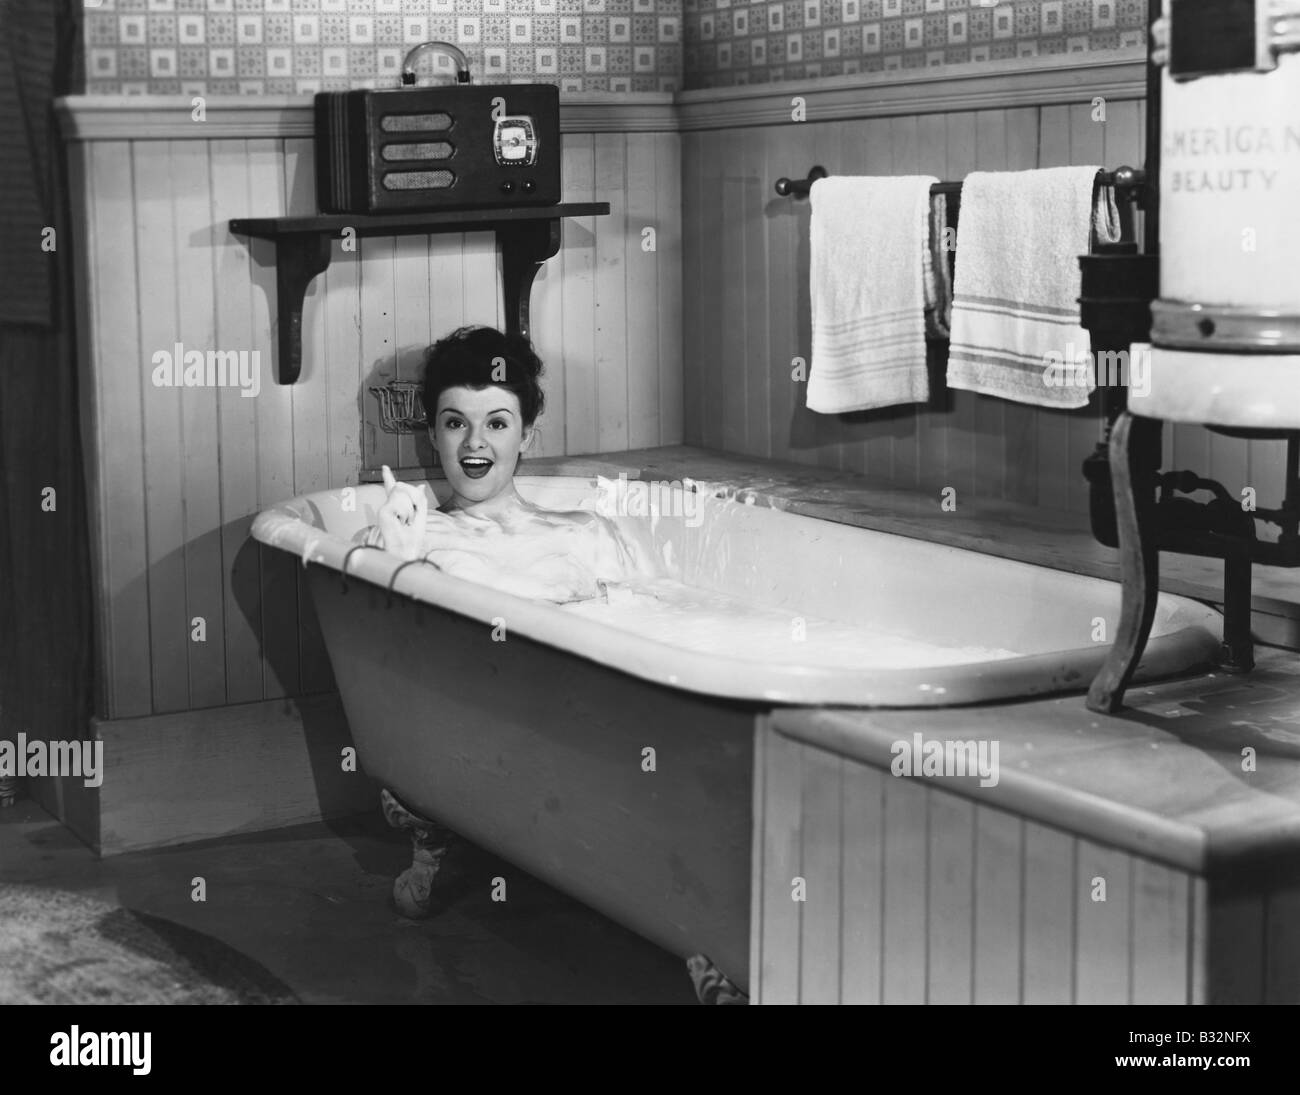 Woman in bathtub Banque D'Images